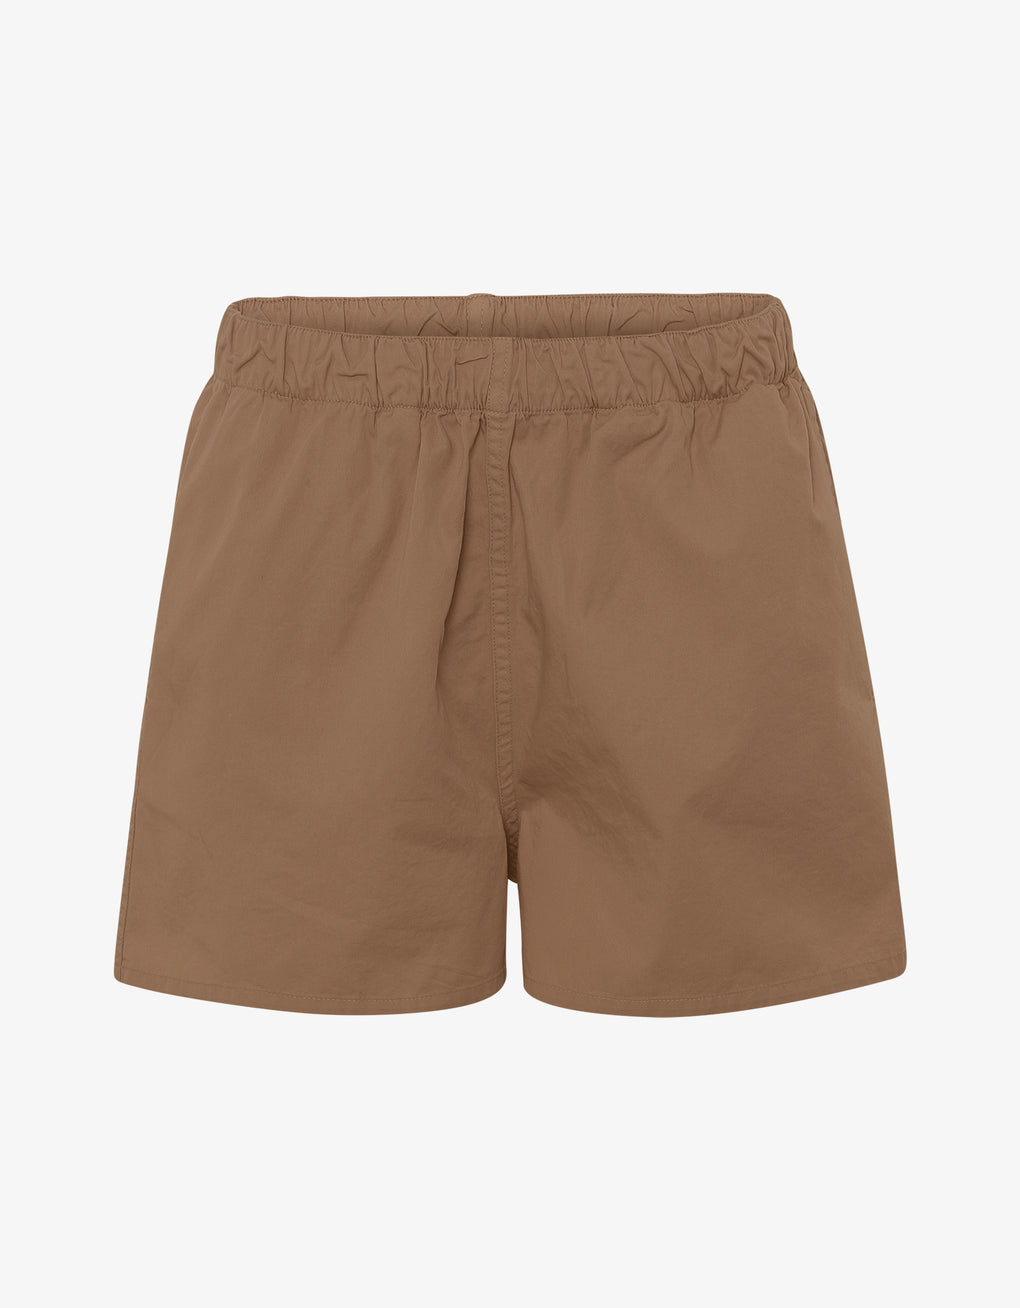 Organic twill shorts - sahara camel